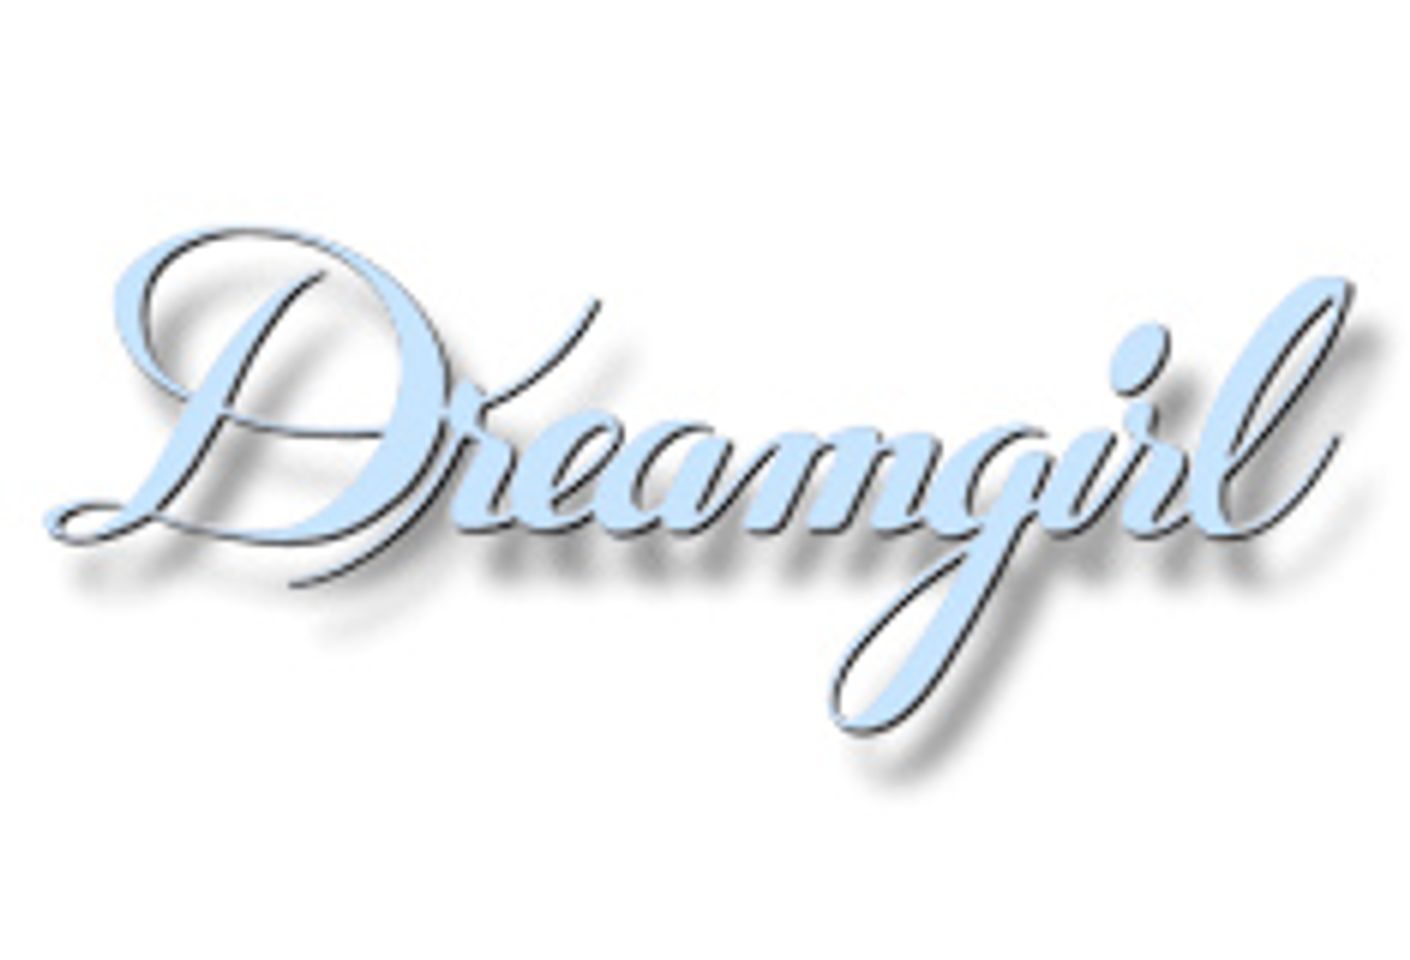 Dreamgirl debuts its 2008/2009 “Nuptials” Bridal Collection